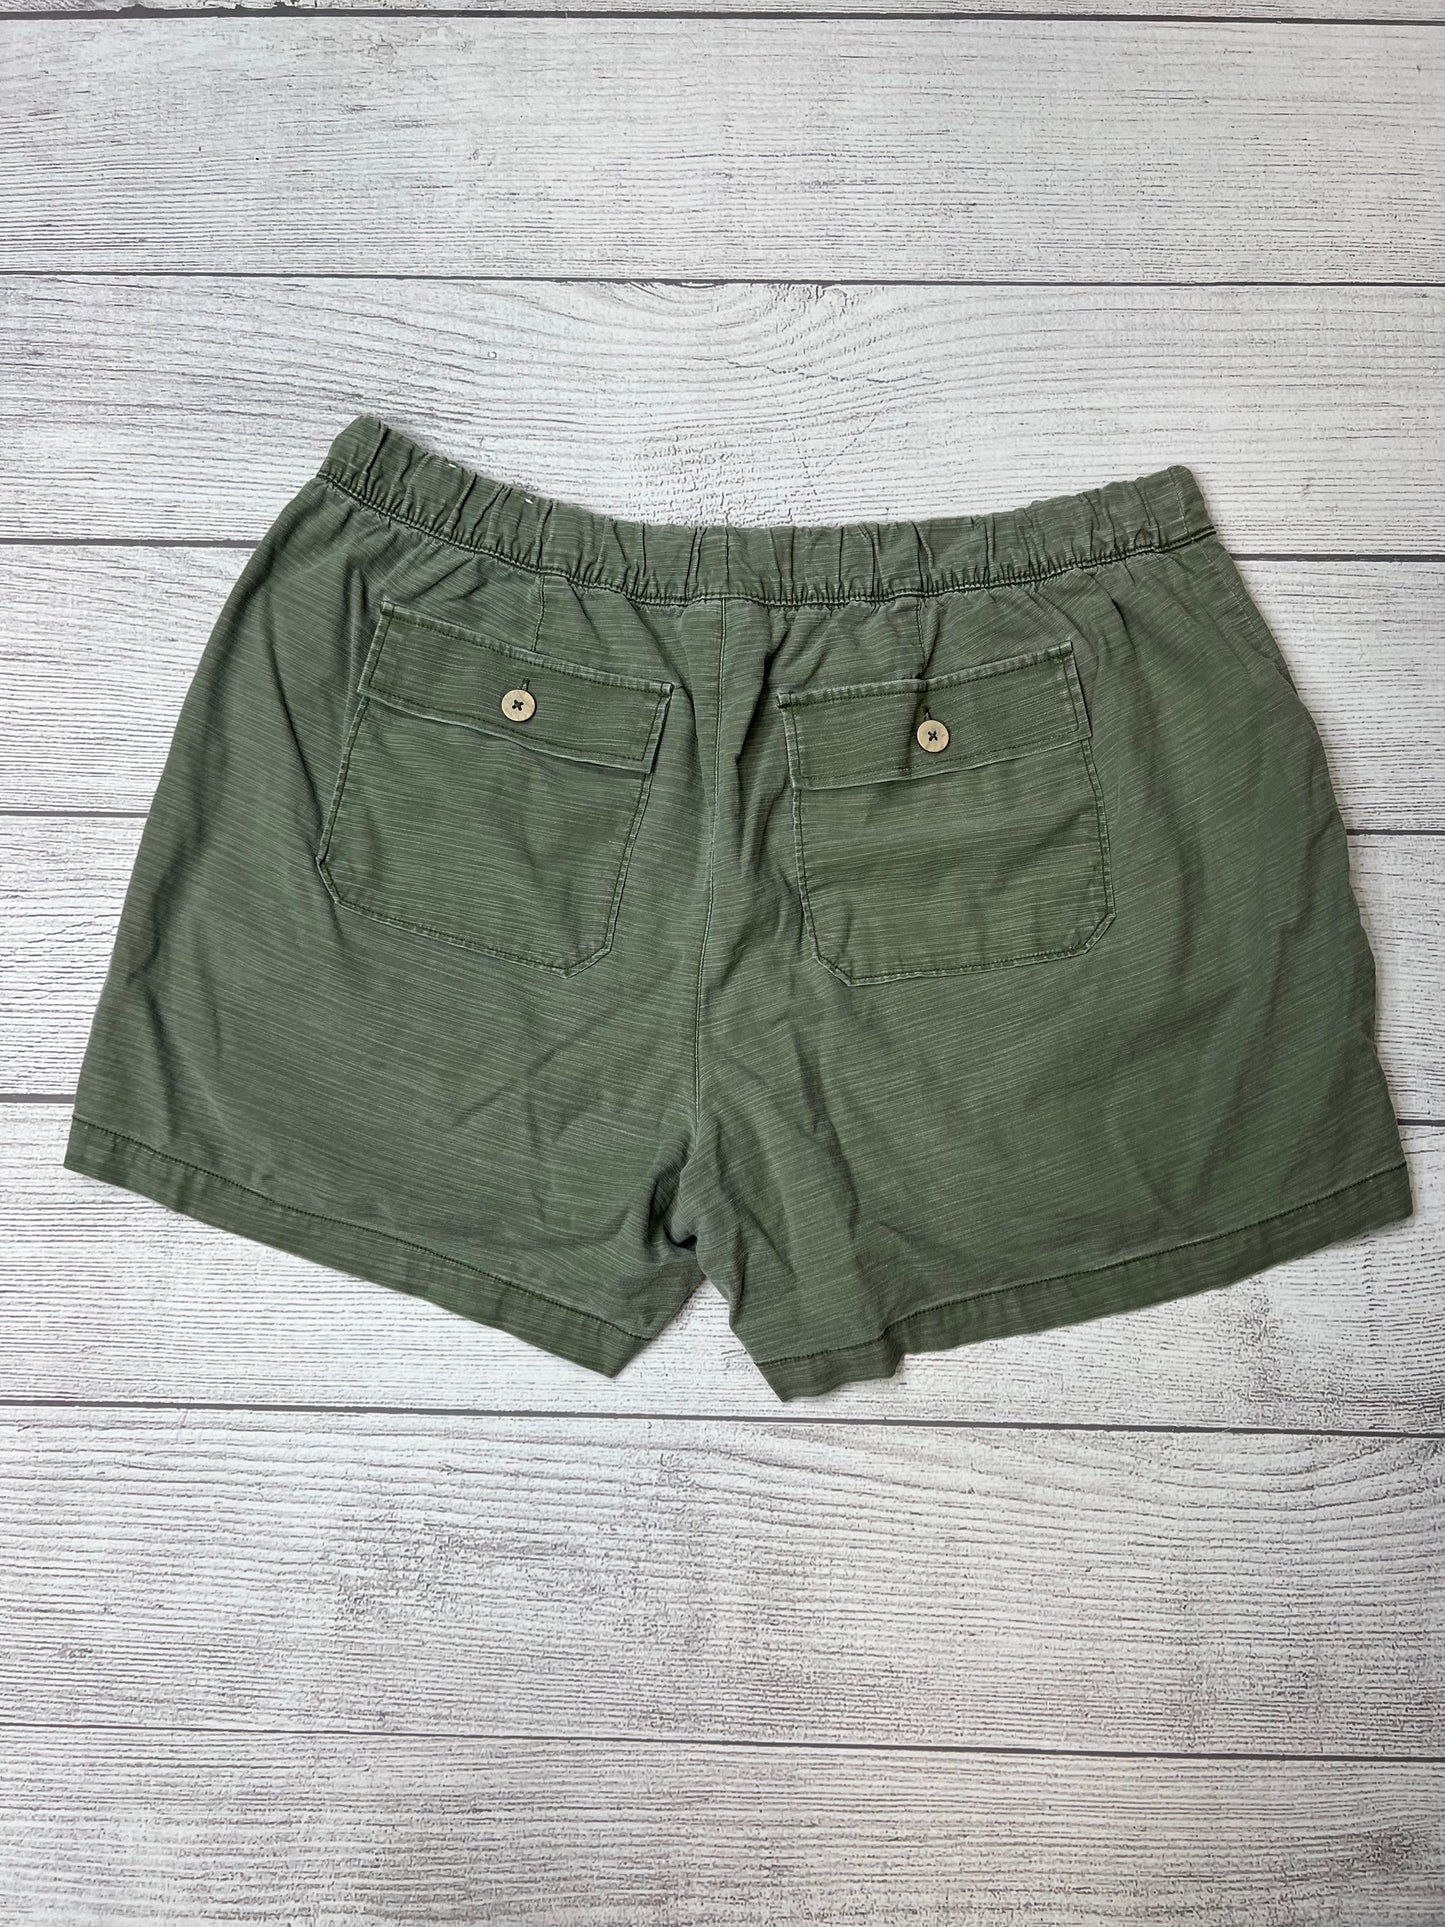 Green Shorts Lane Bryant, Size 20